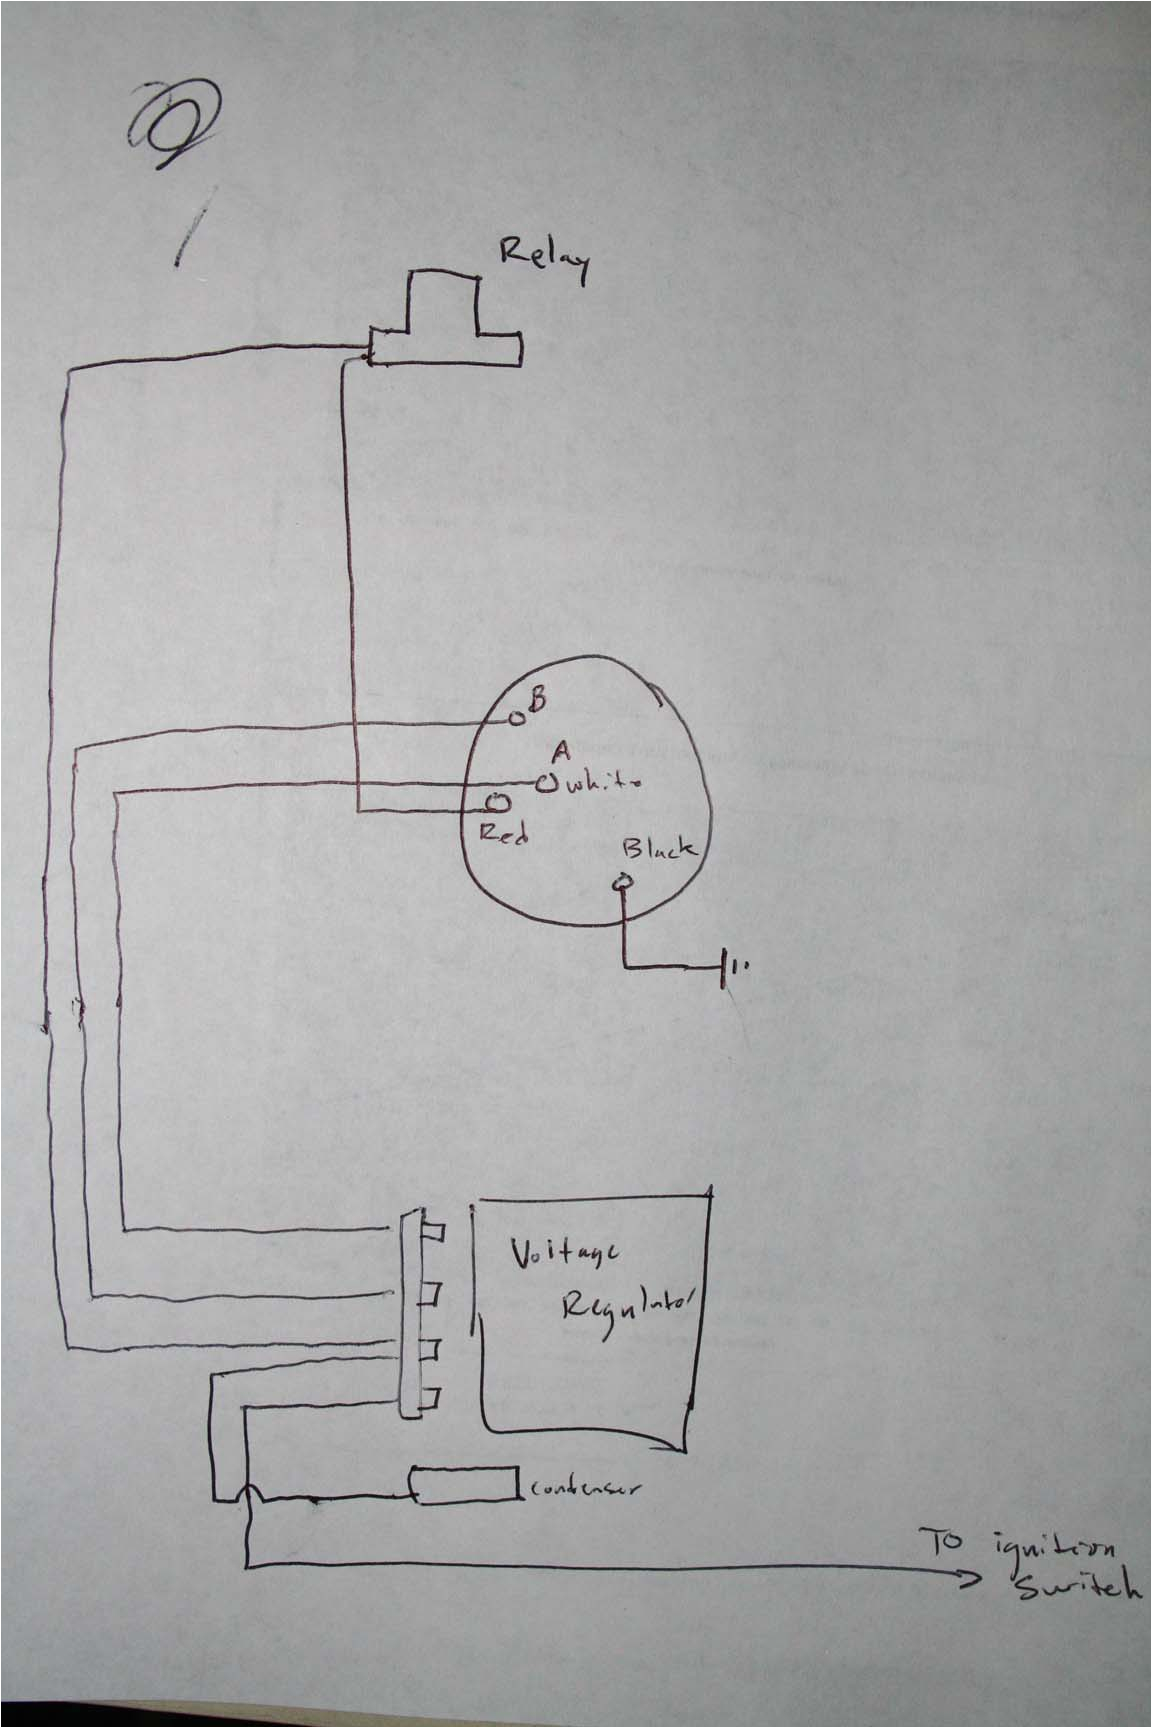 Cen Tech Battery Charger Wiring Diagram Wiring Diagram for Voltage Regulator Blog Wiring Diagram